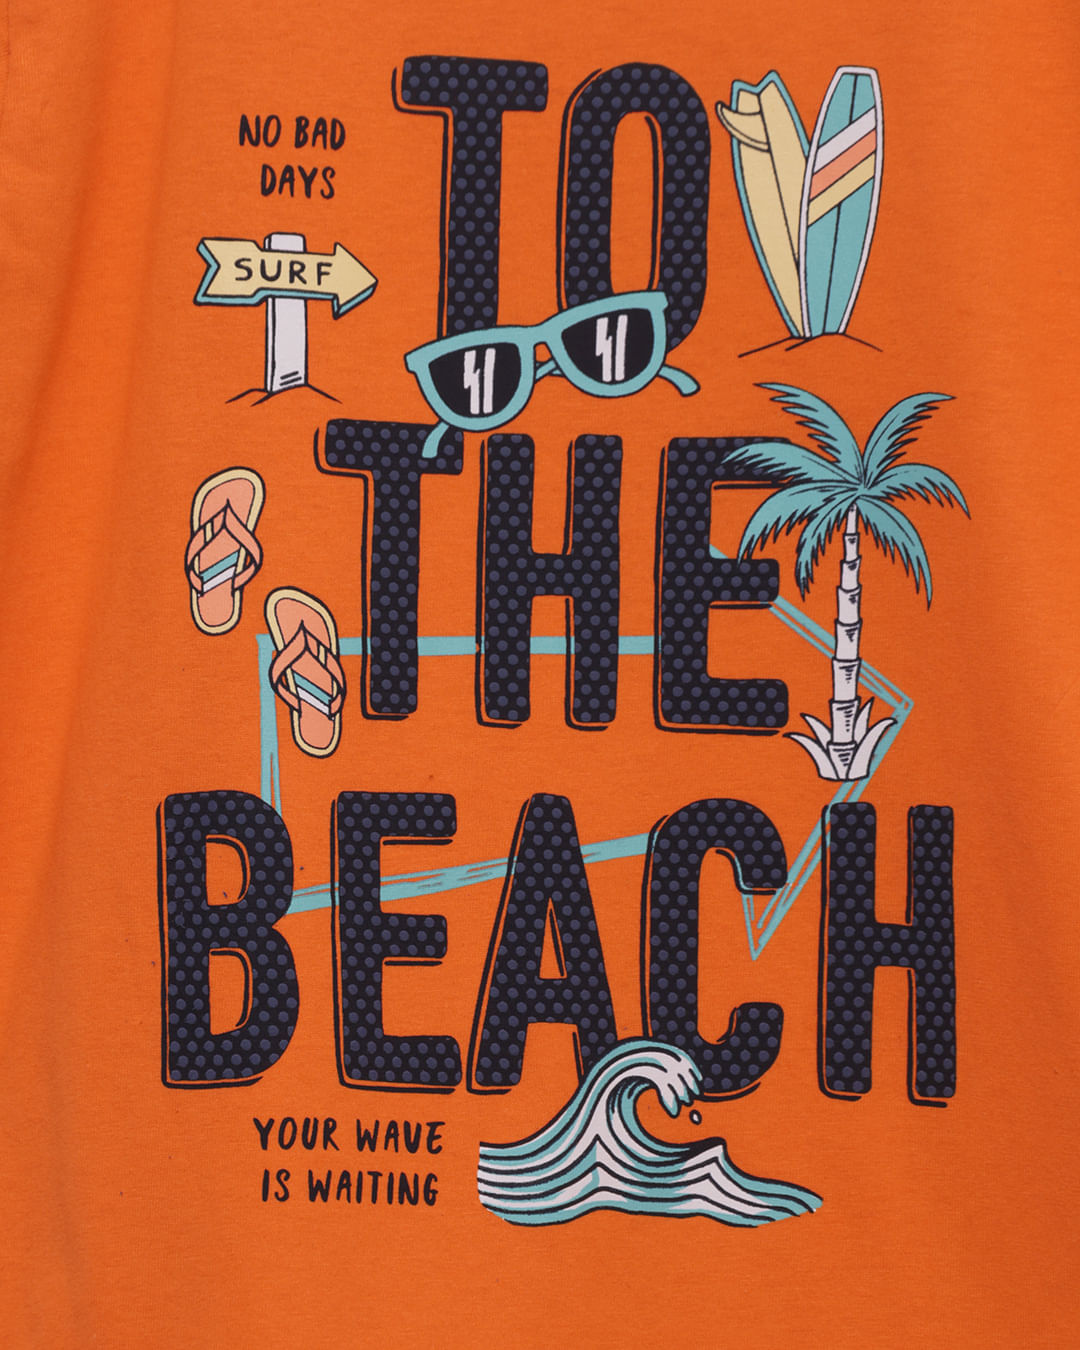 Camiseta-Mc-T38070-Beach-Masc13---Laranja-Medio